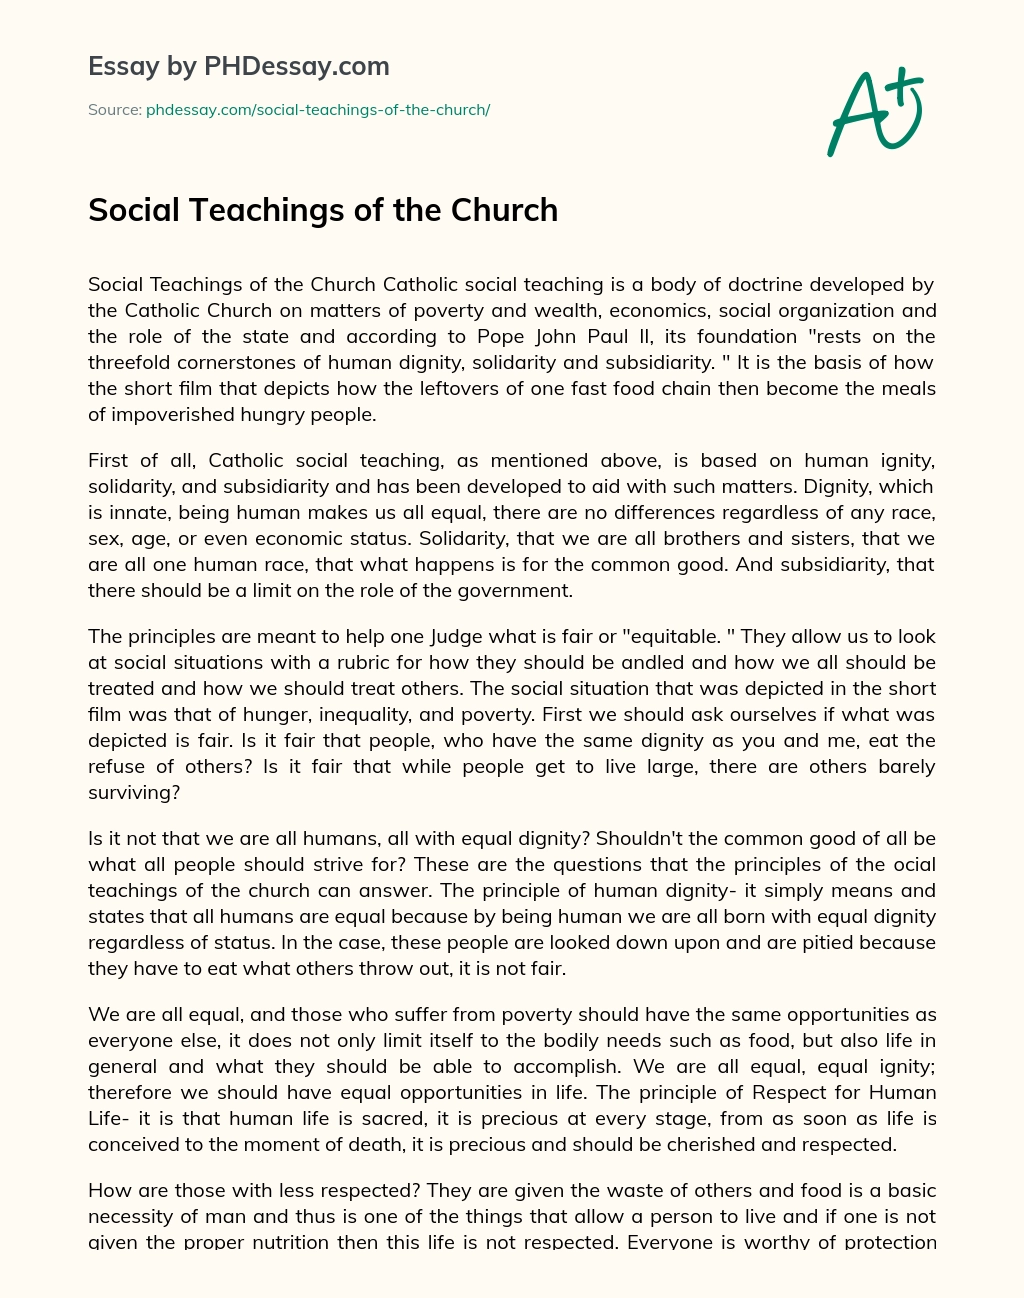 Social Teachings of the Church essay